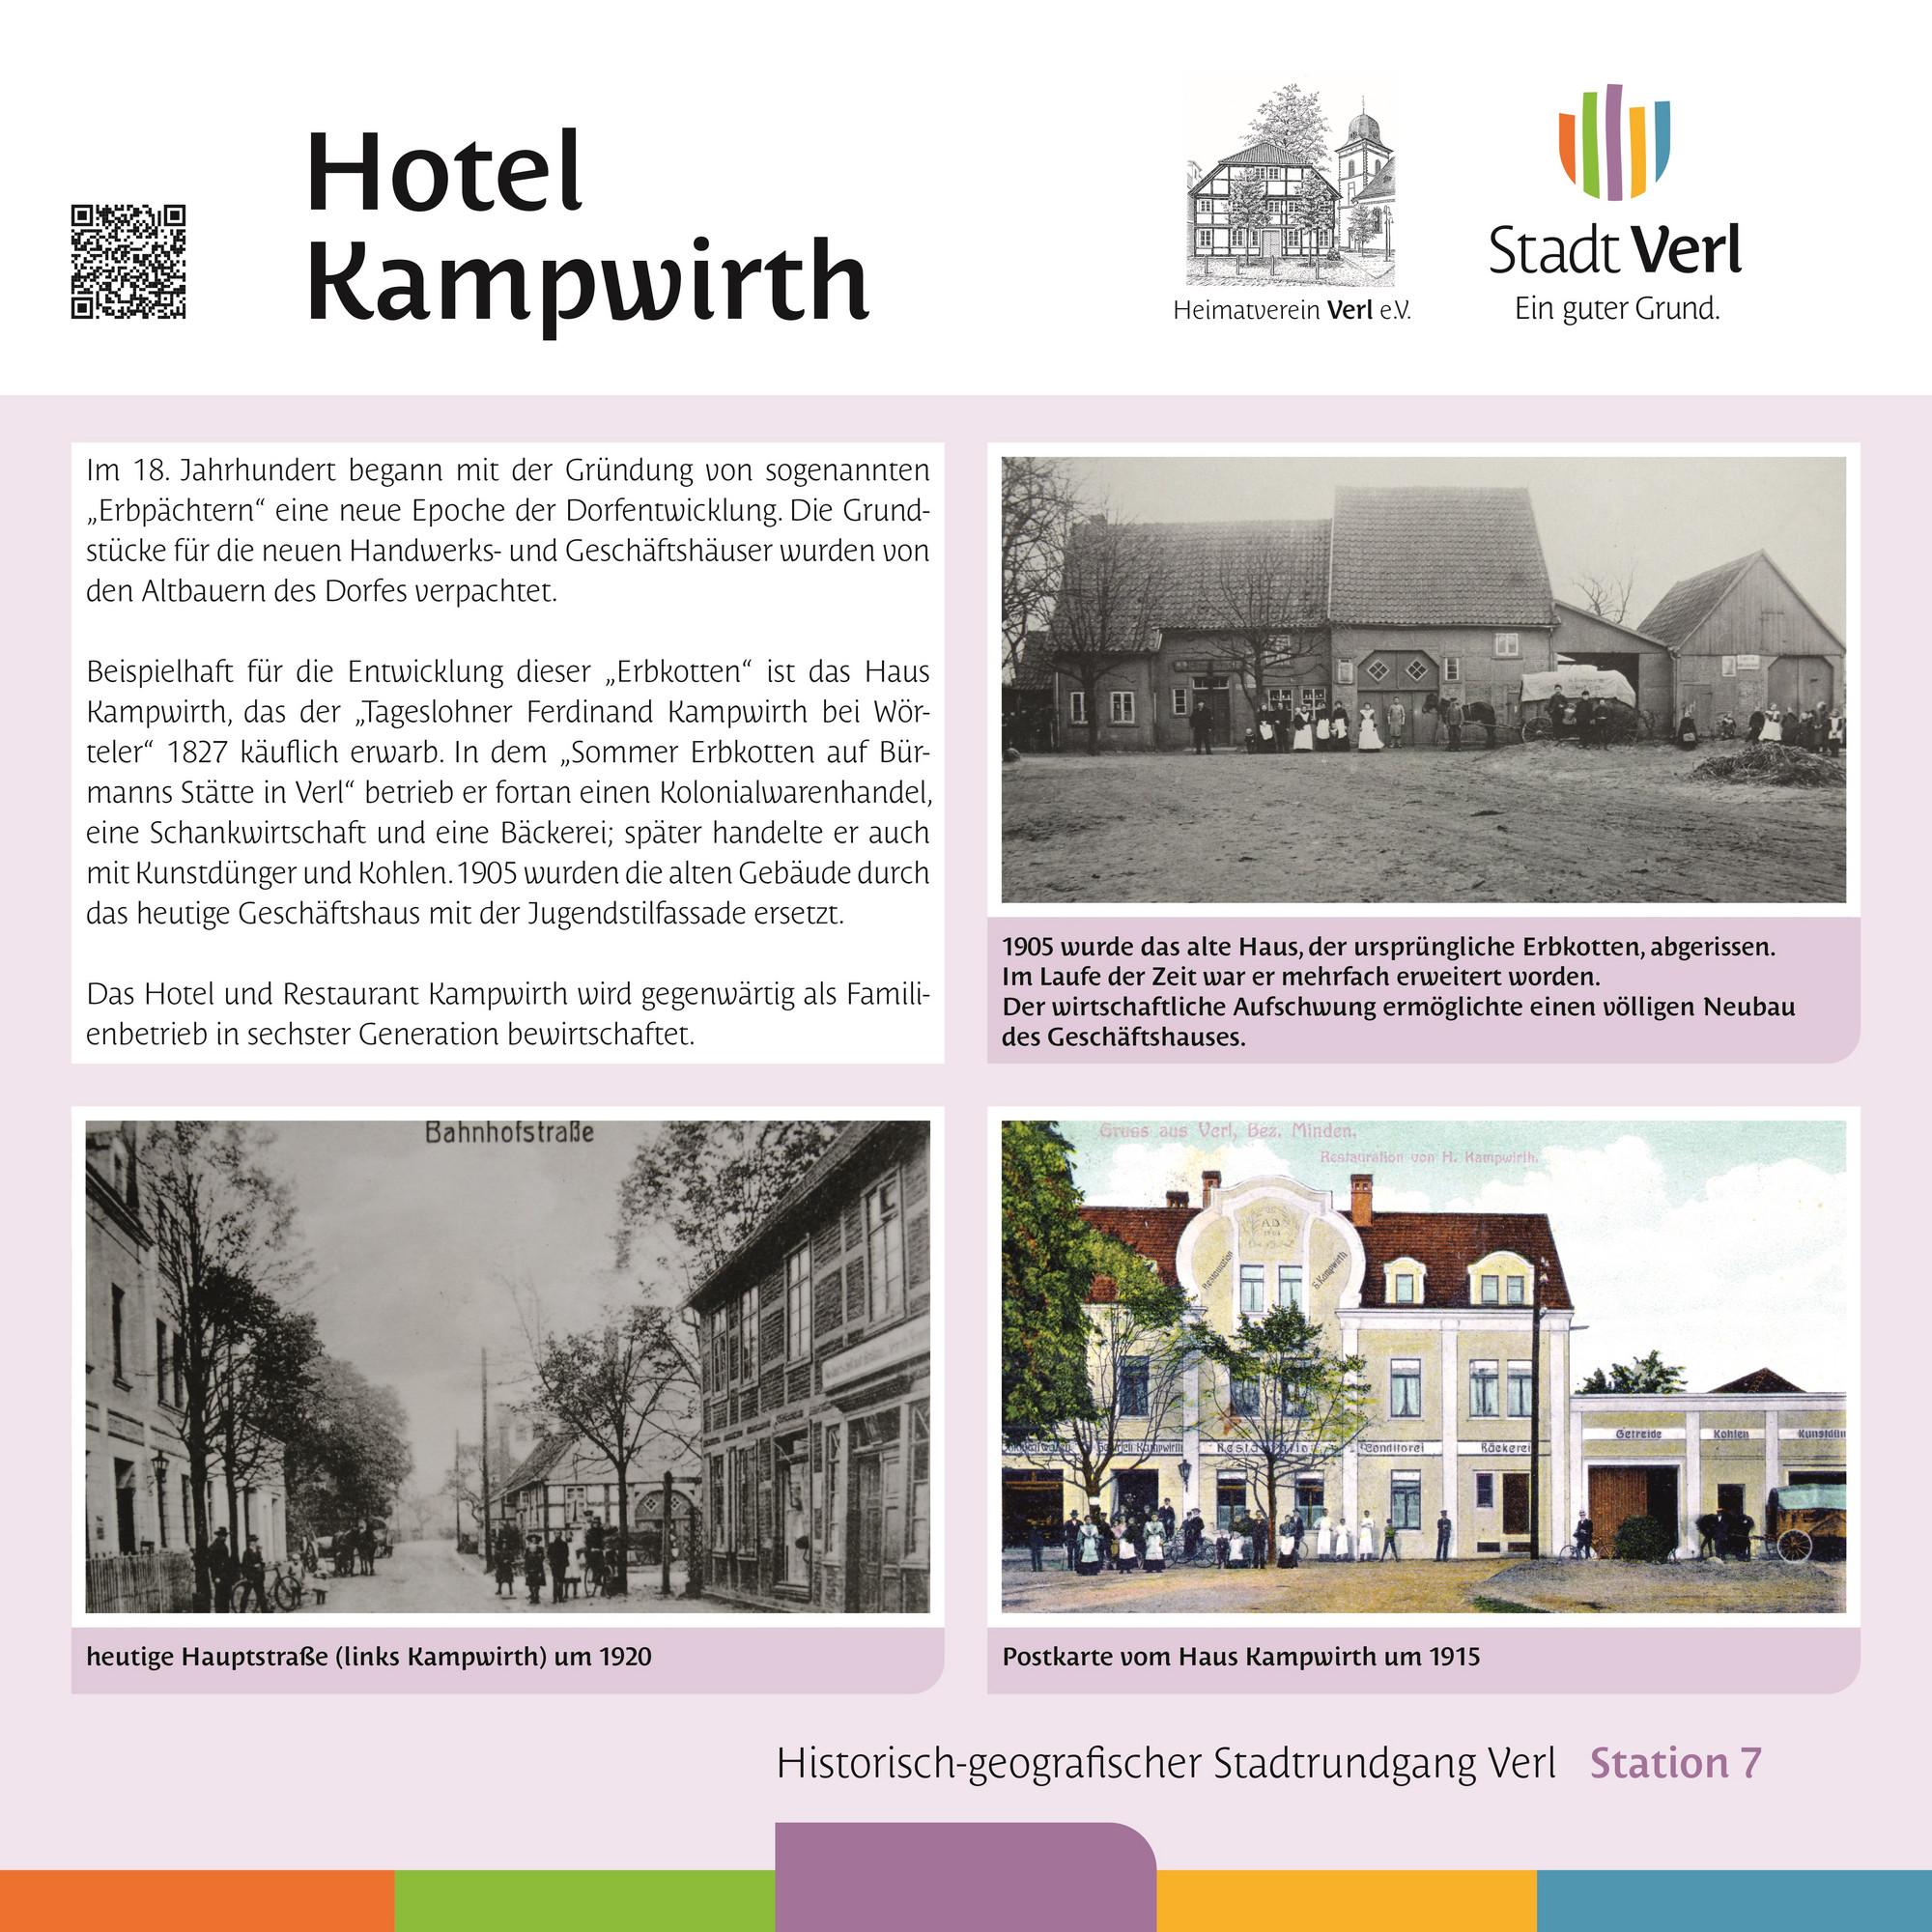 Station 7: Hotel Kampwirth